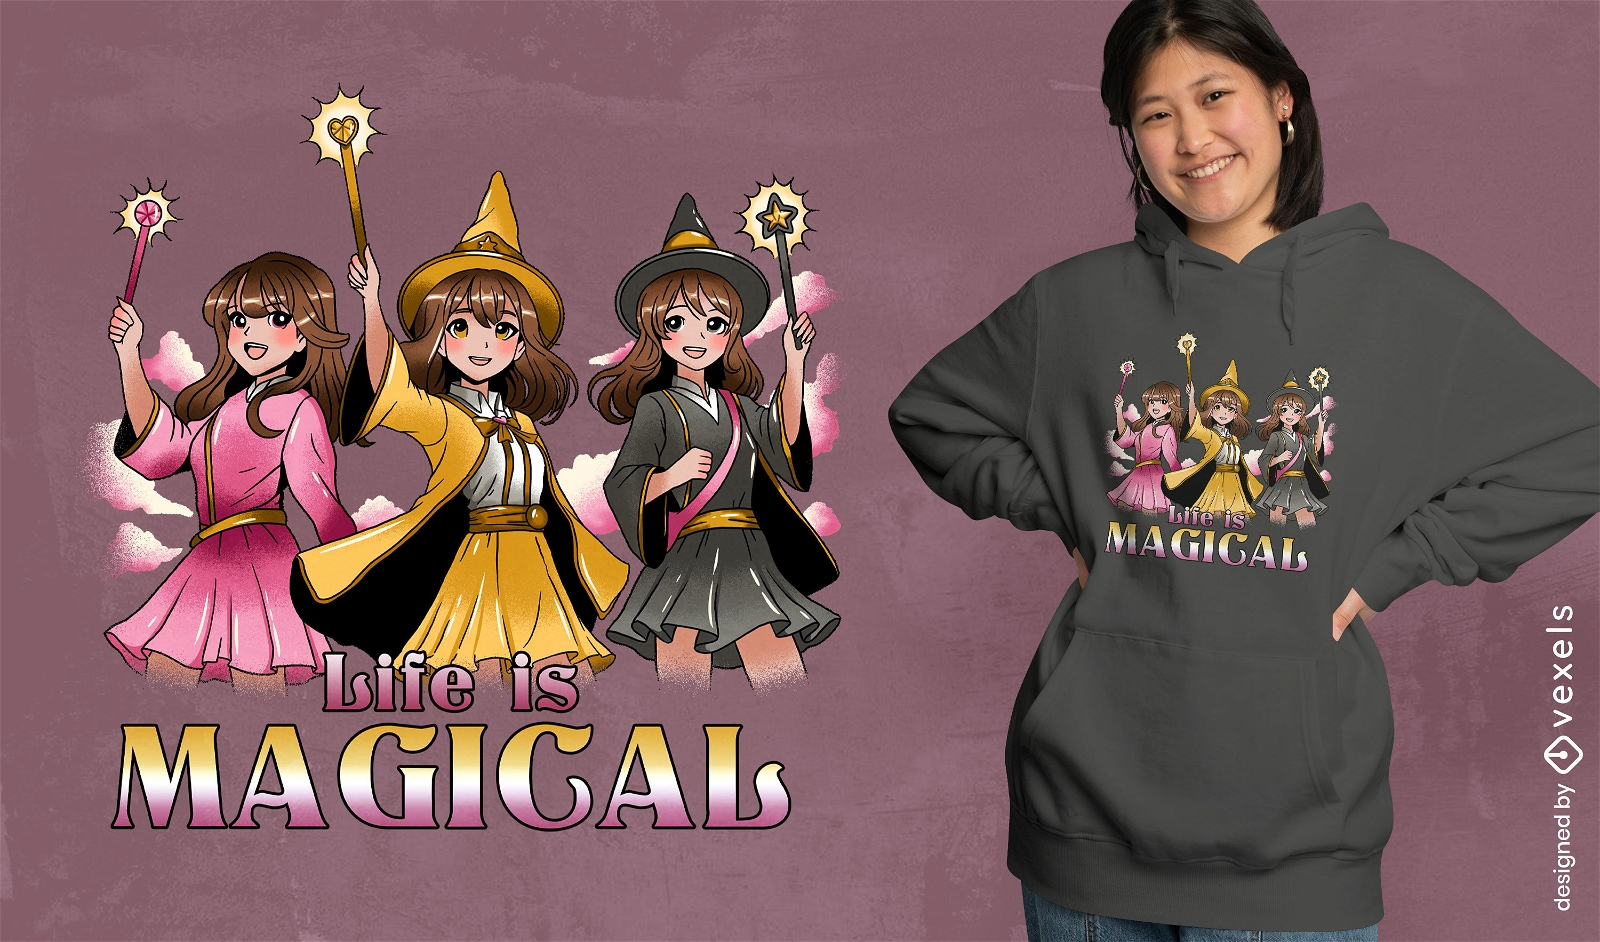 Magical girl squad t-shirt design